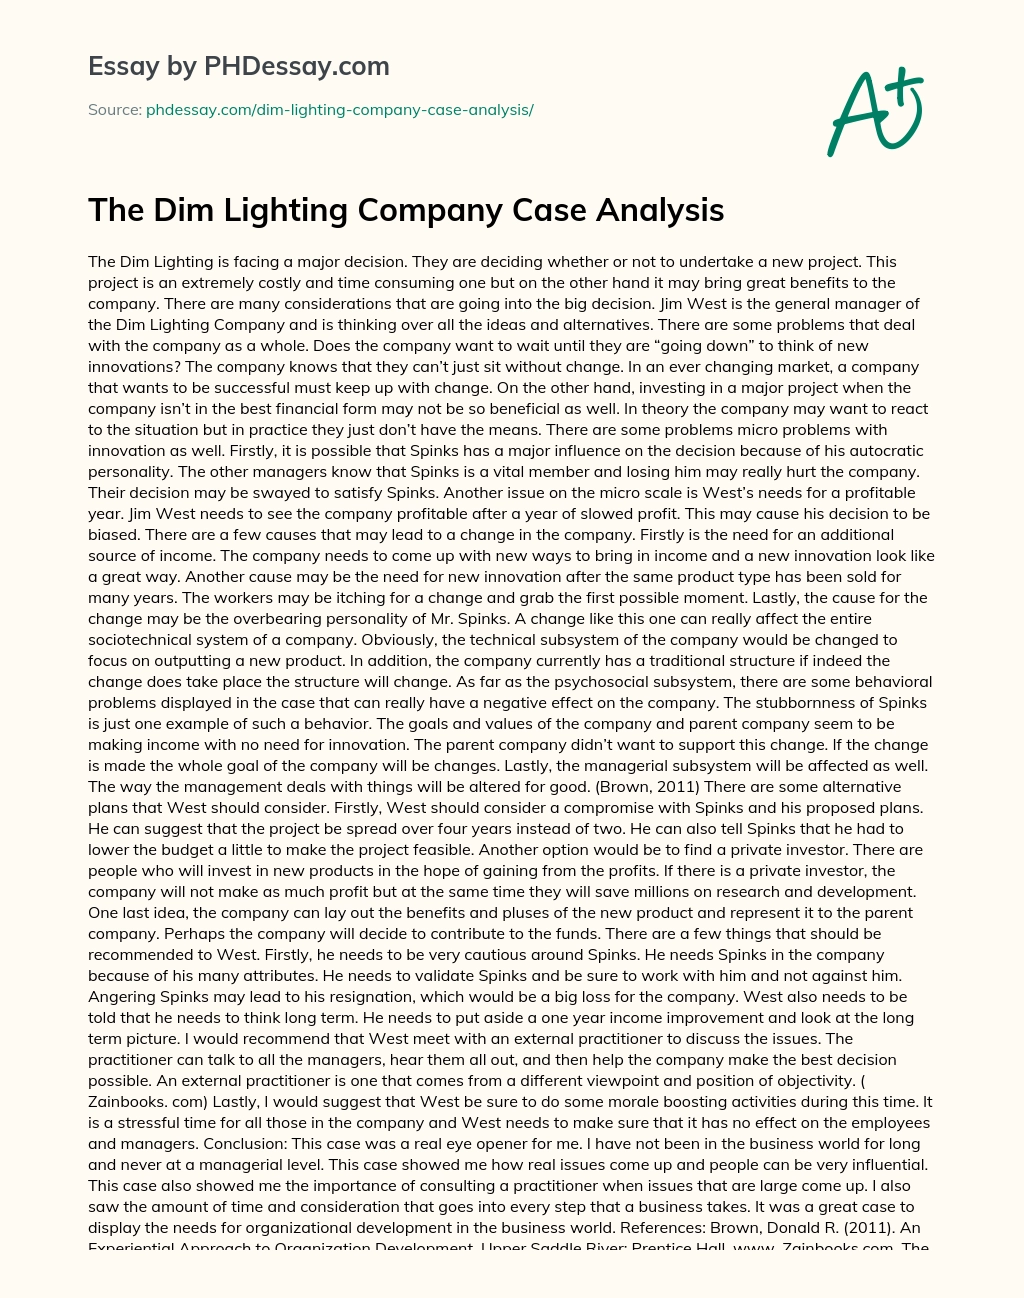 The Dim Lighting Company Case Analysis essay